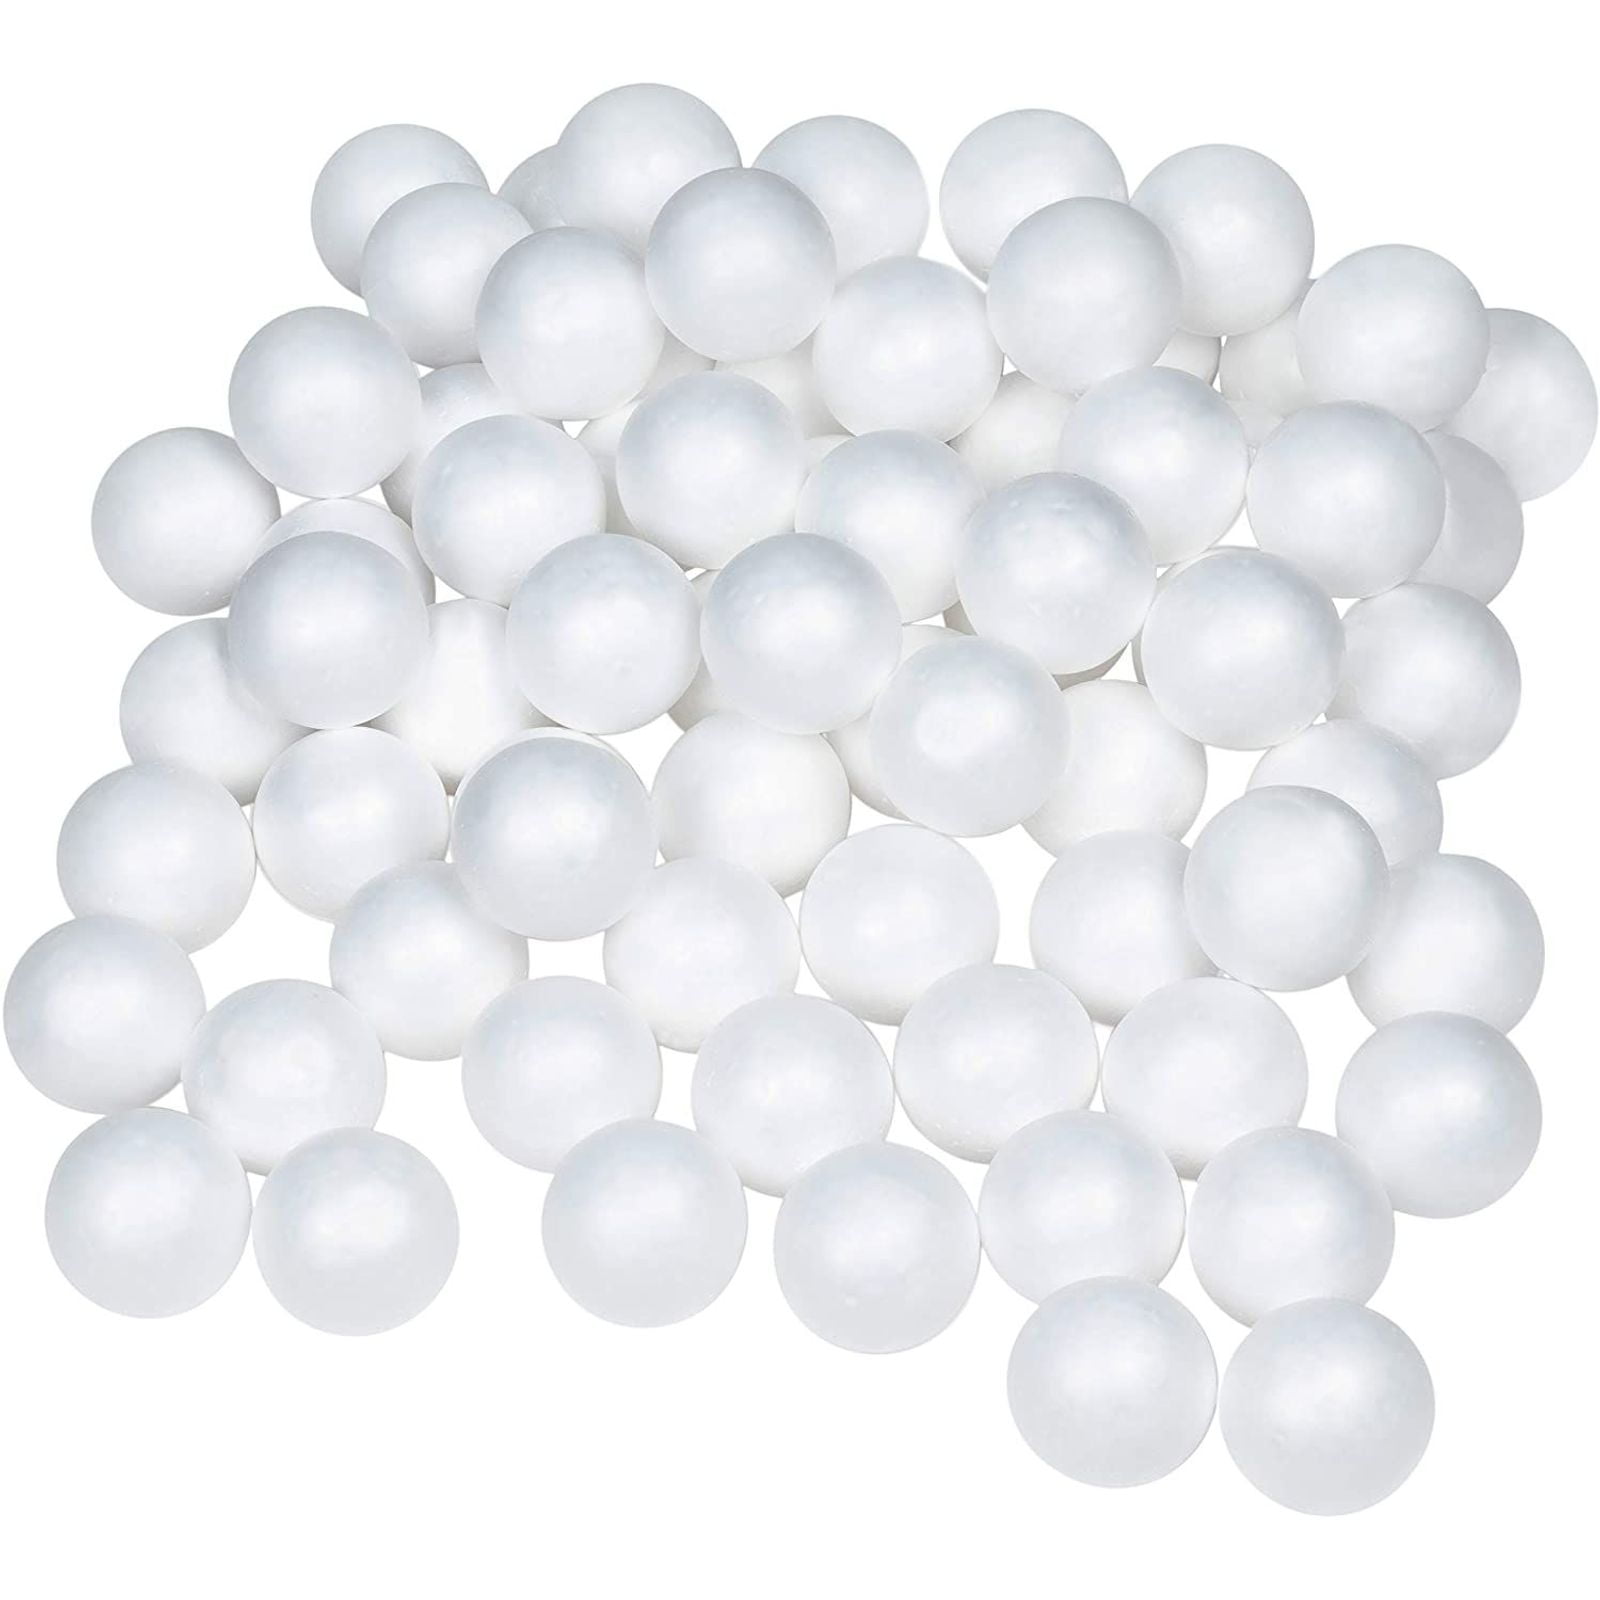 Buy Splendid Mini Styrofoam Balls Today At Cheap Prices 